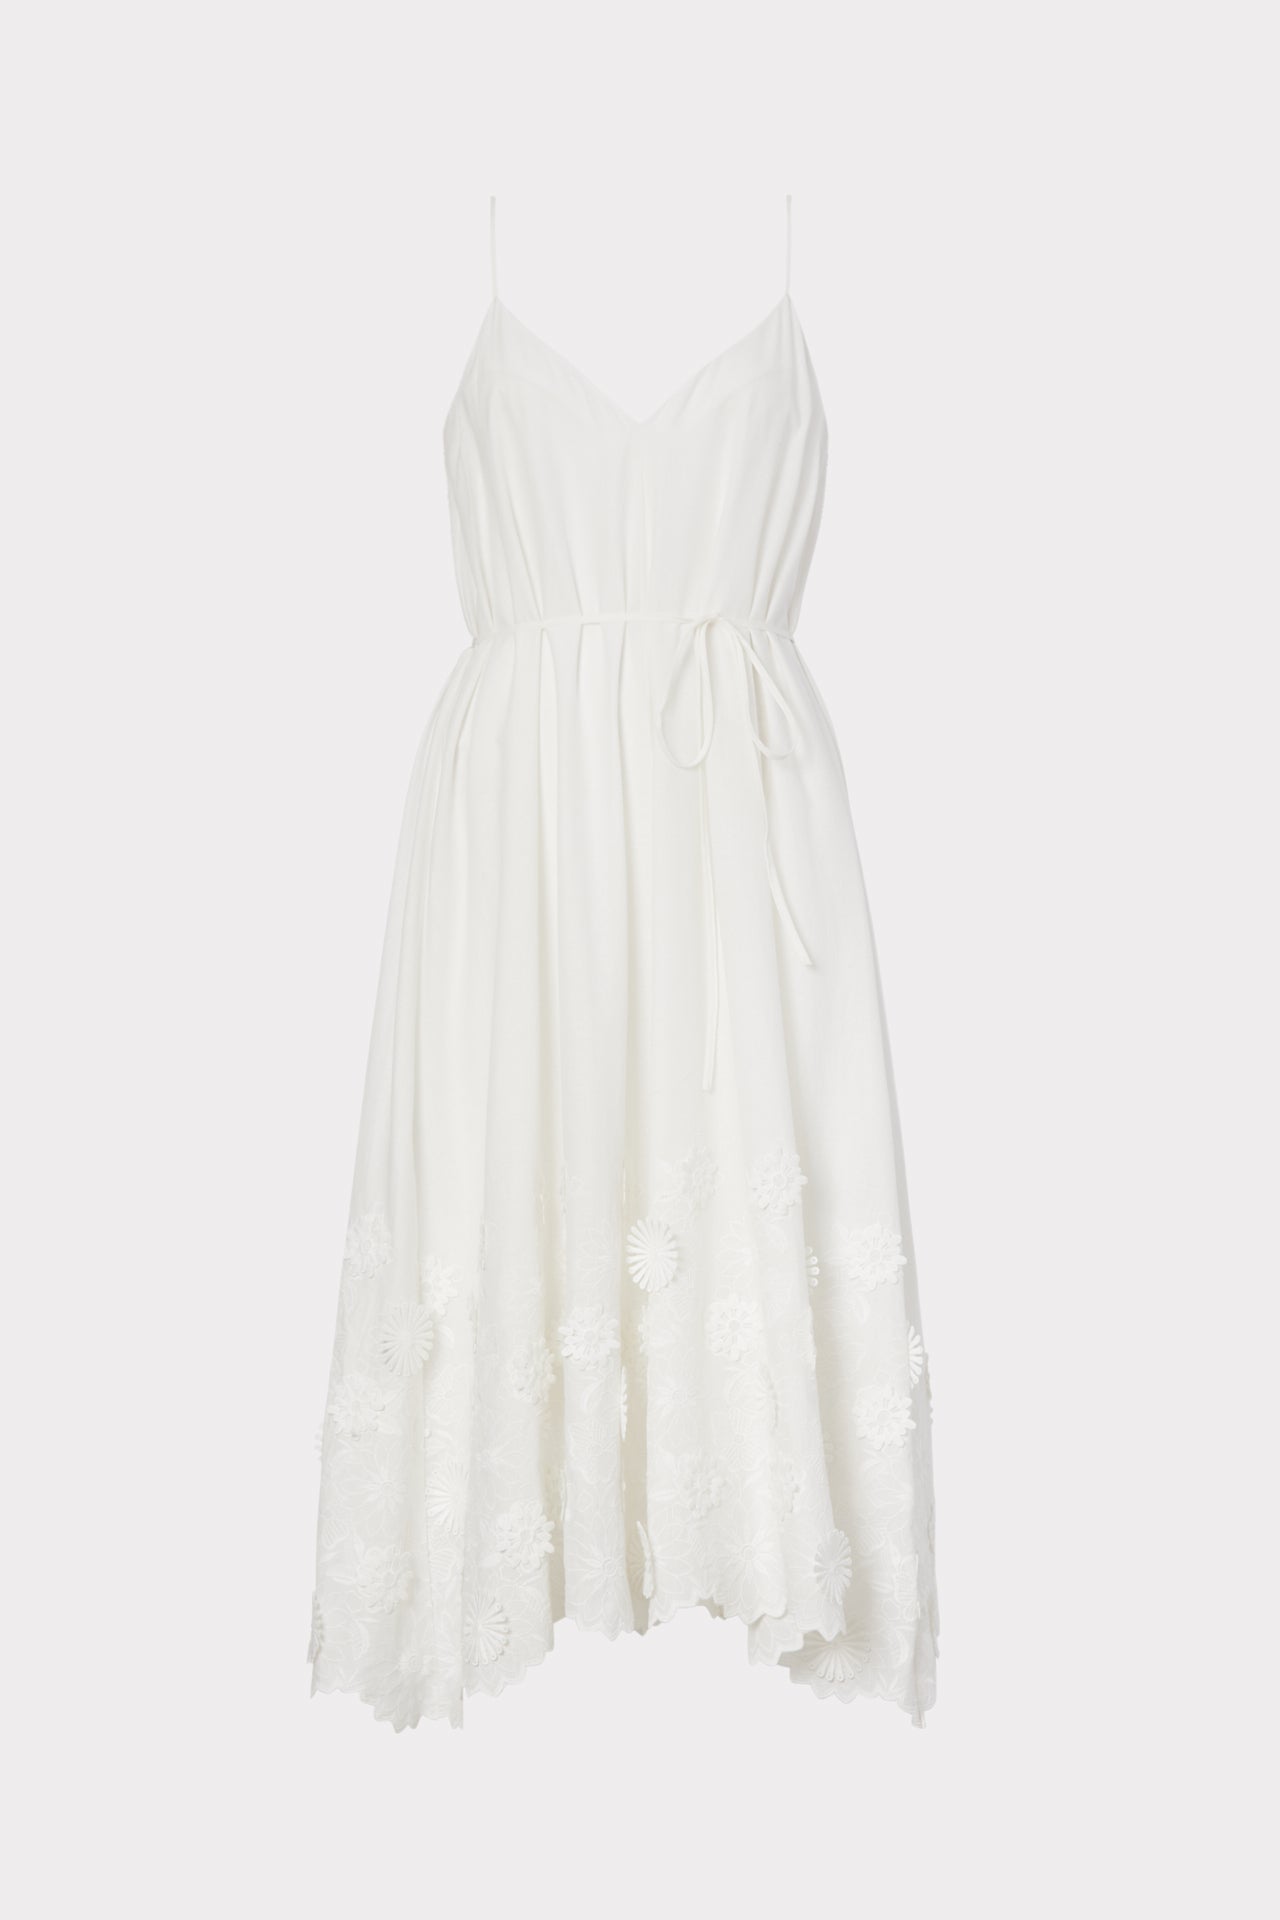 Becca 3D Cotton Embroidered Dress